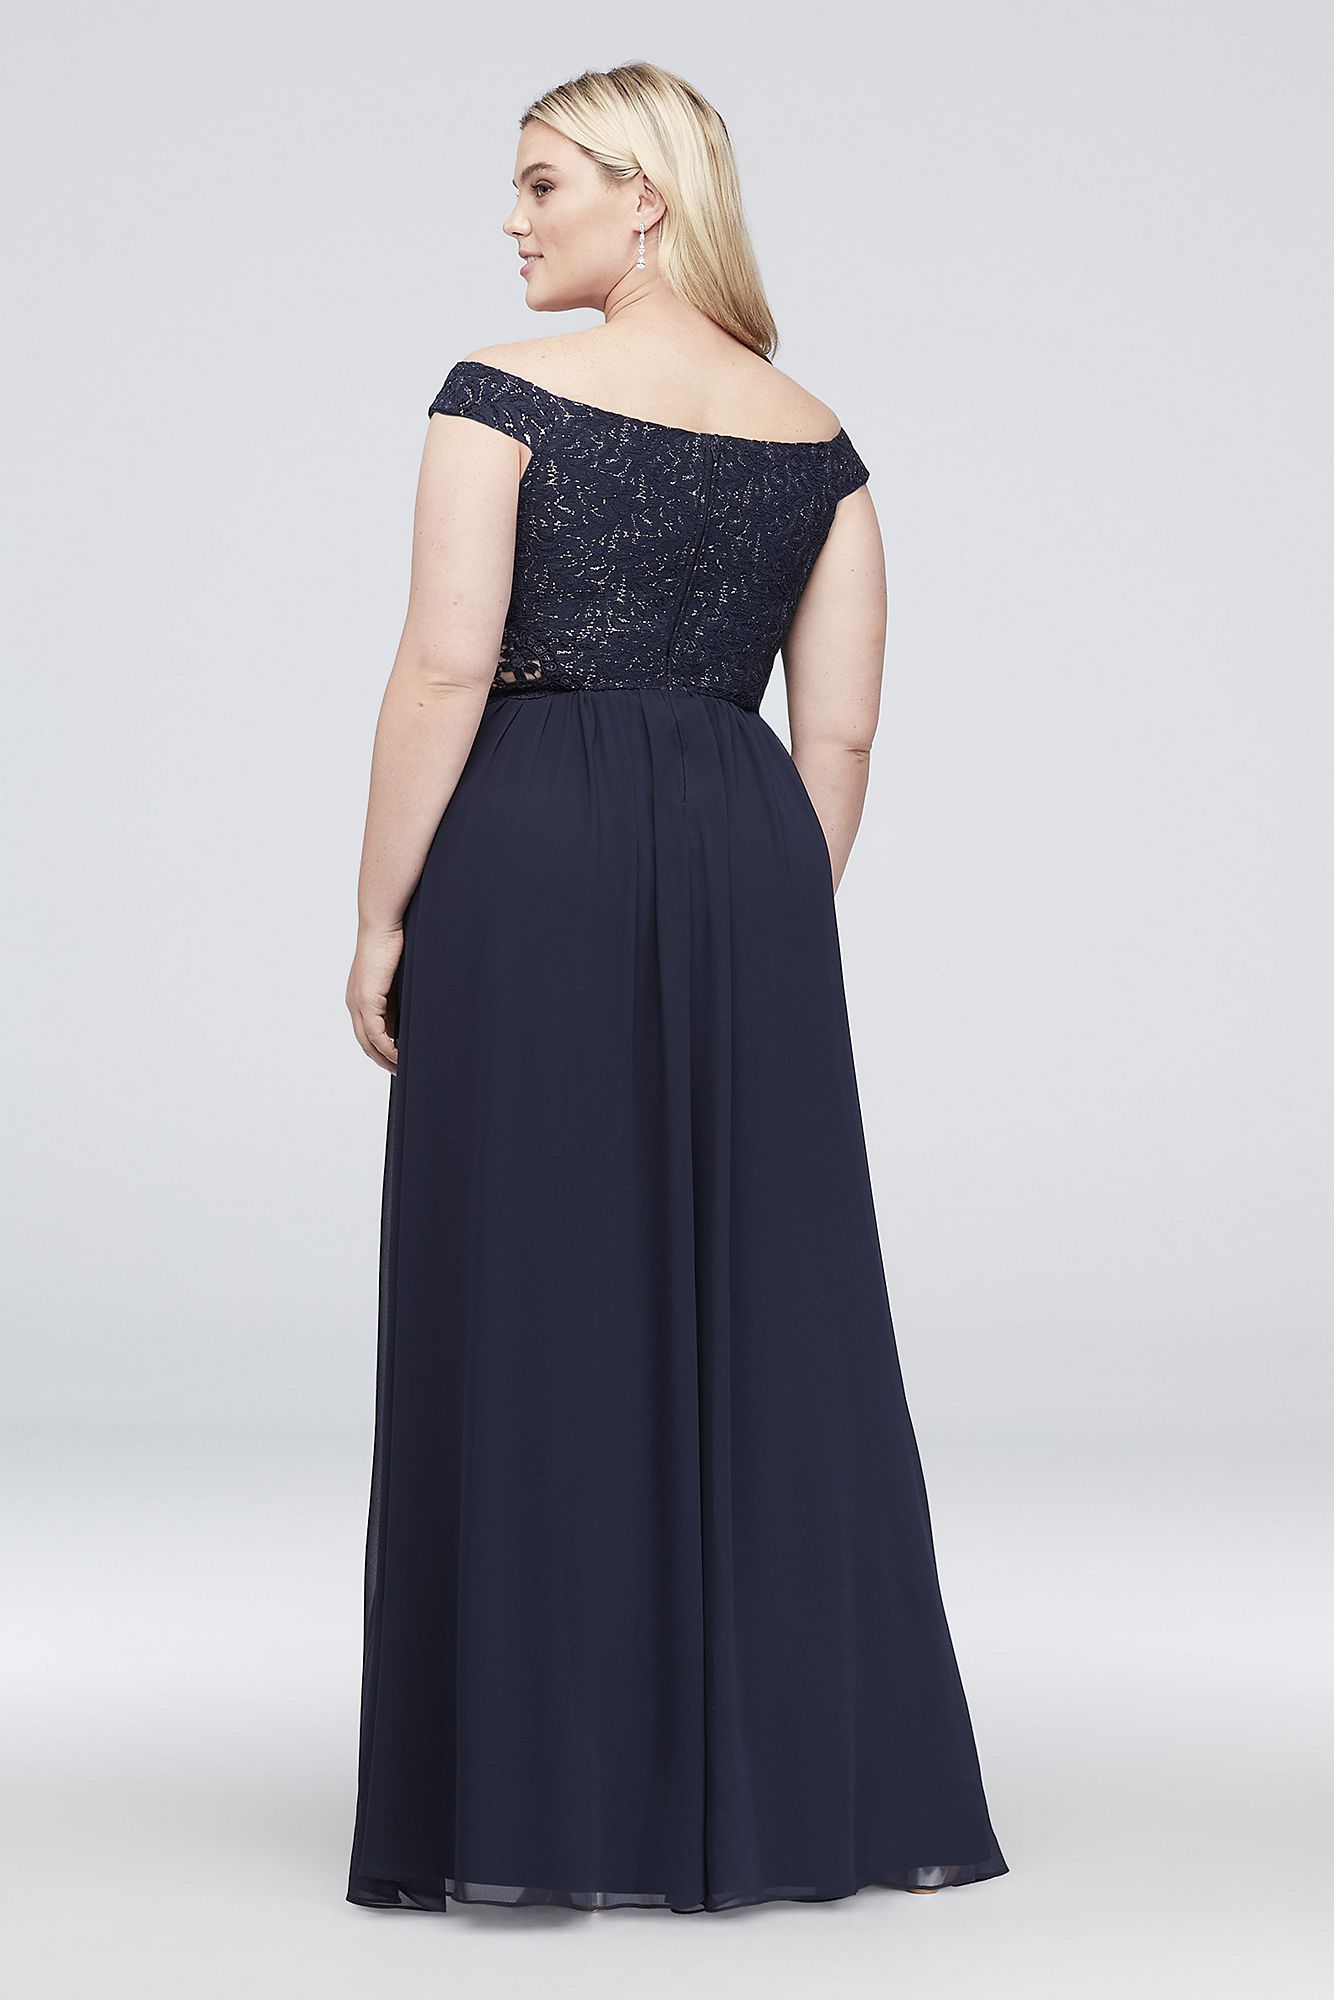 Off-the-Shoulder Metallic Lace Plus Size Gown 3471RJ4W